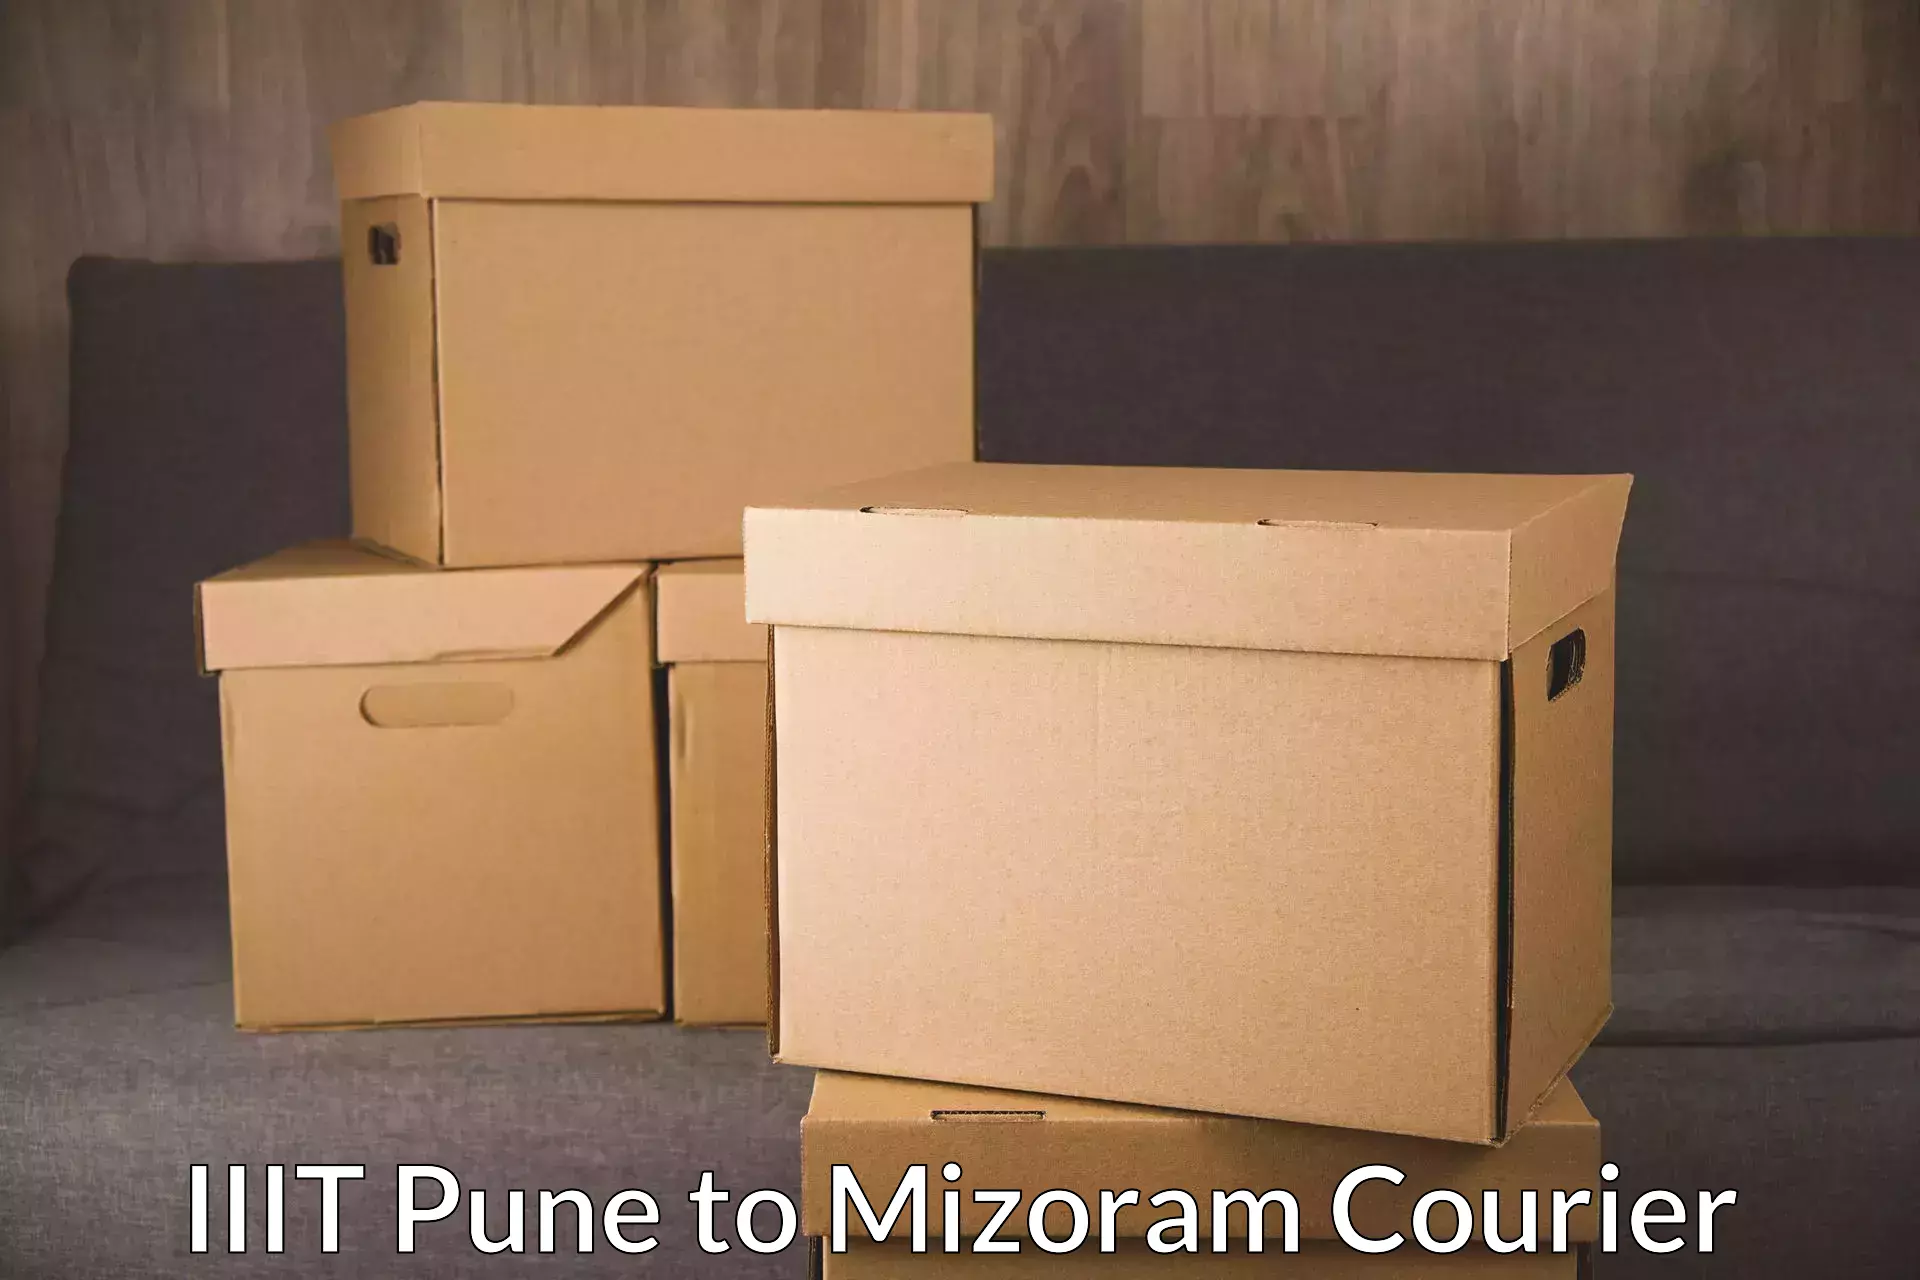 Express package handling IIIT Pune to Mizoram